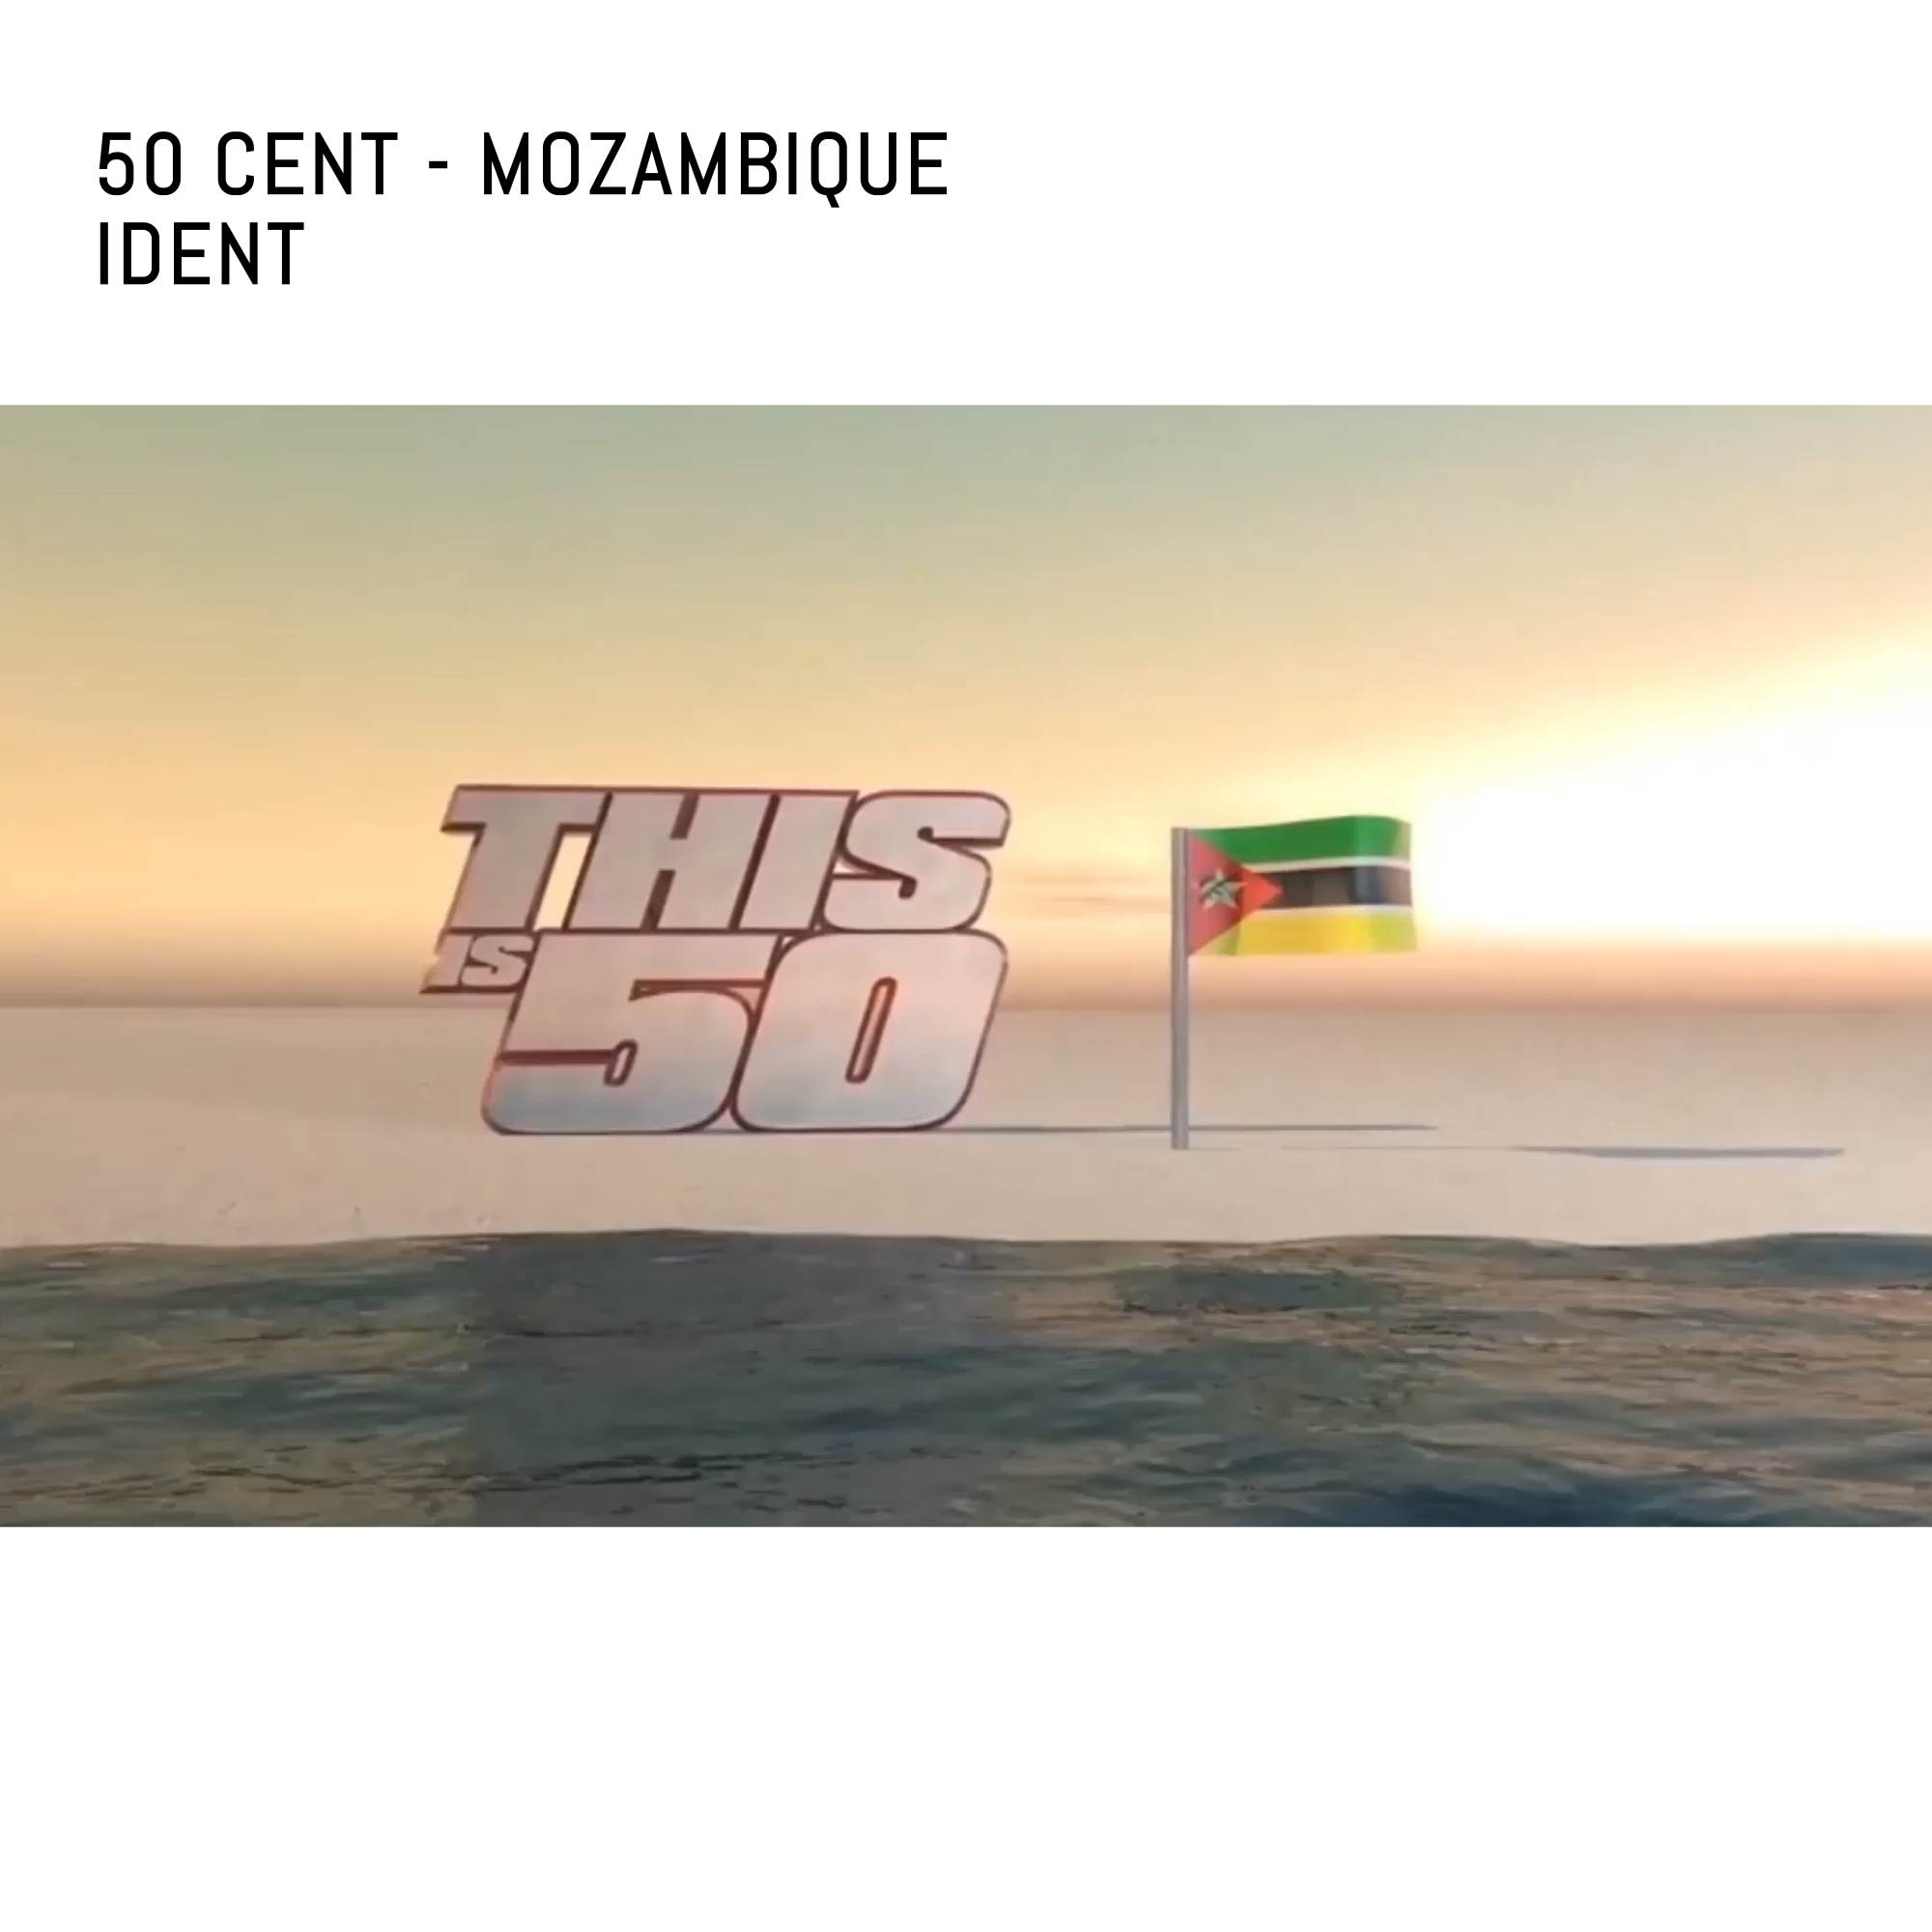 Mozambique_00205.jpg